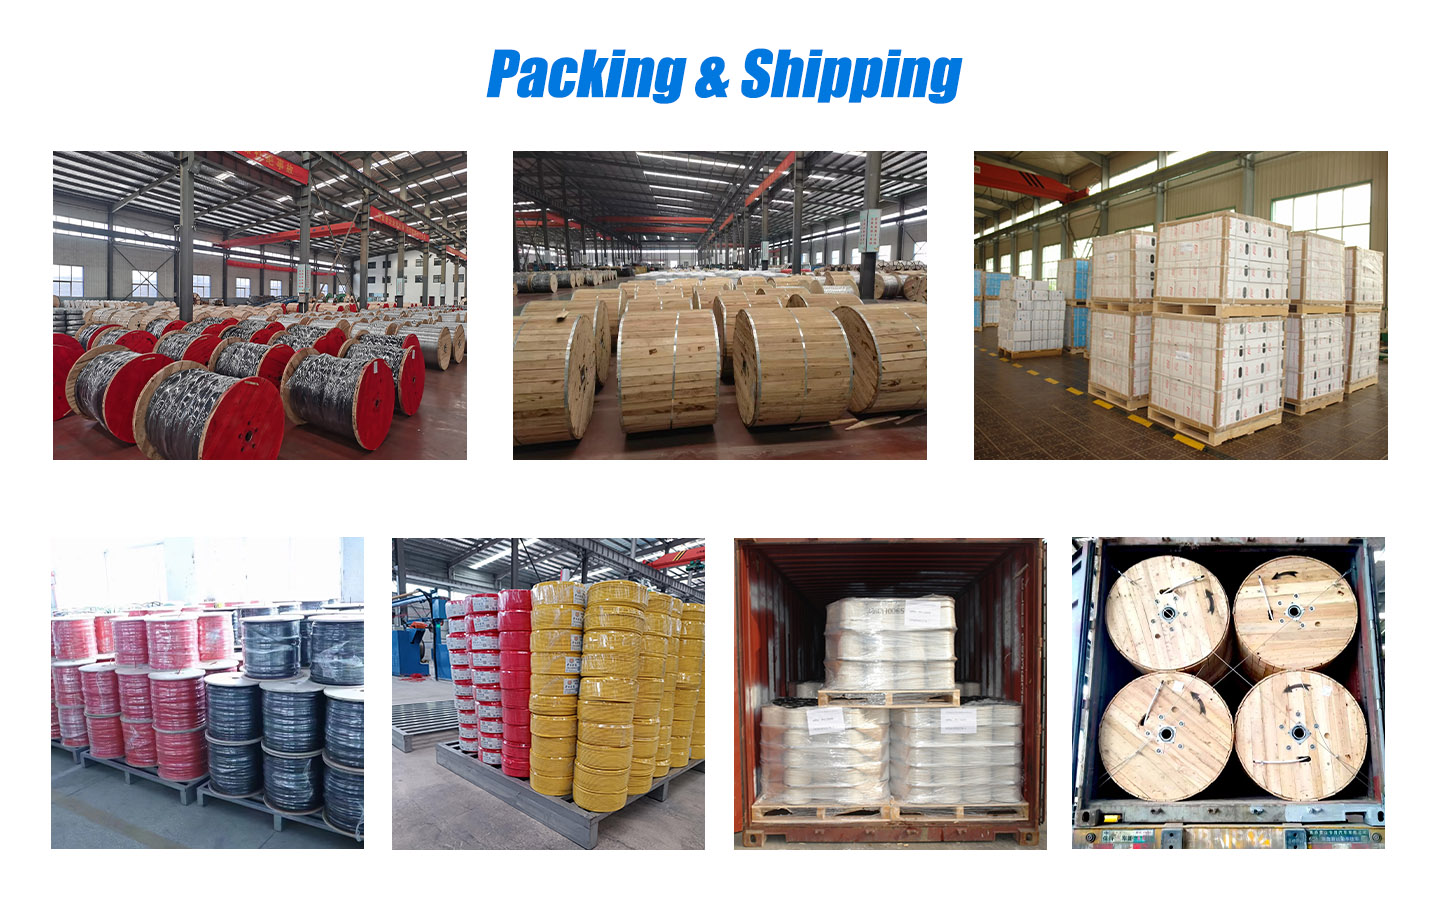 Ippakkjar & Shipping